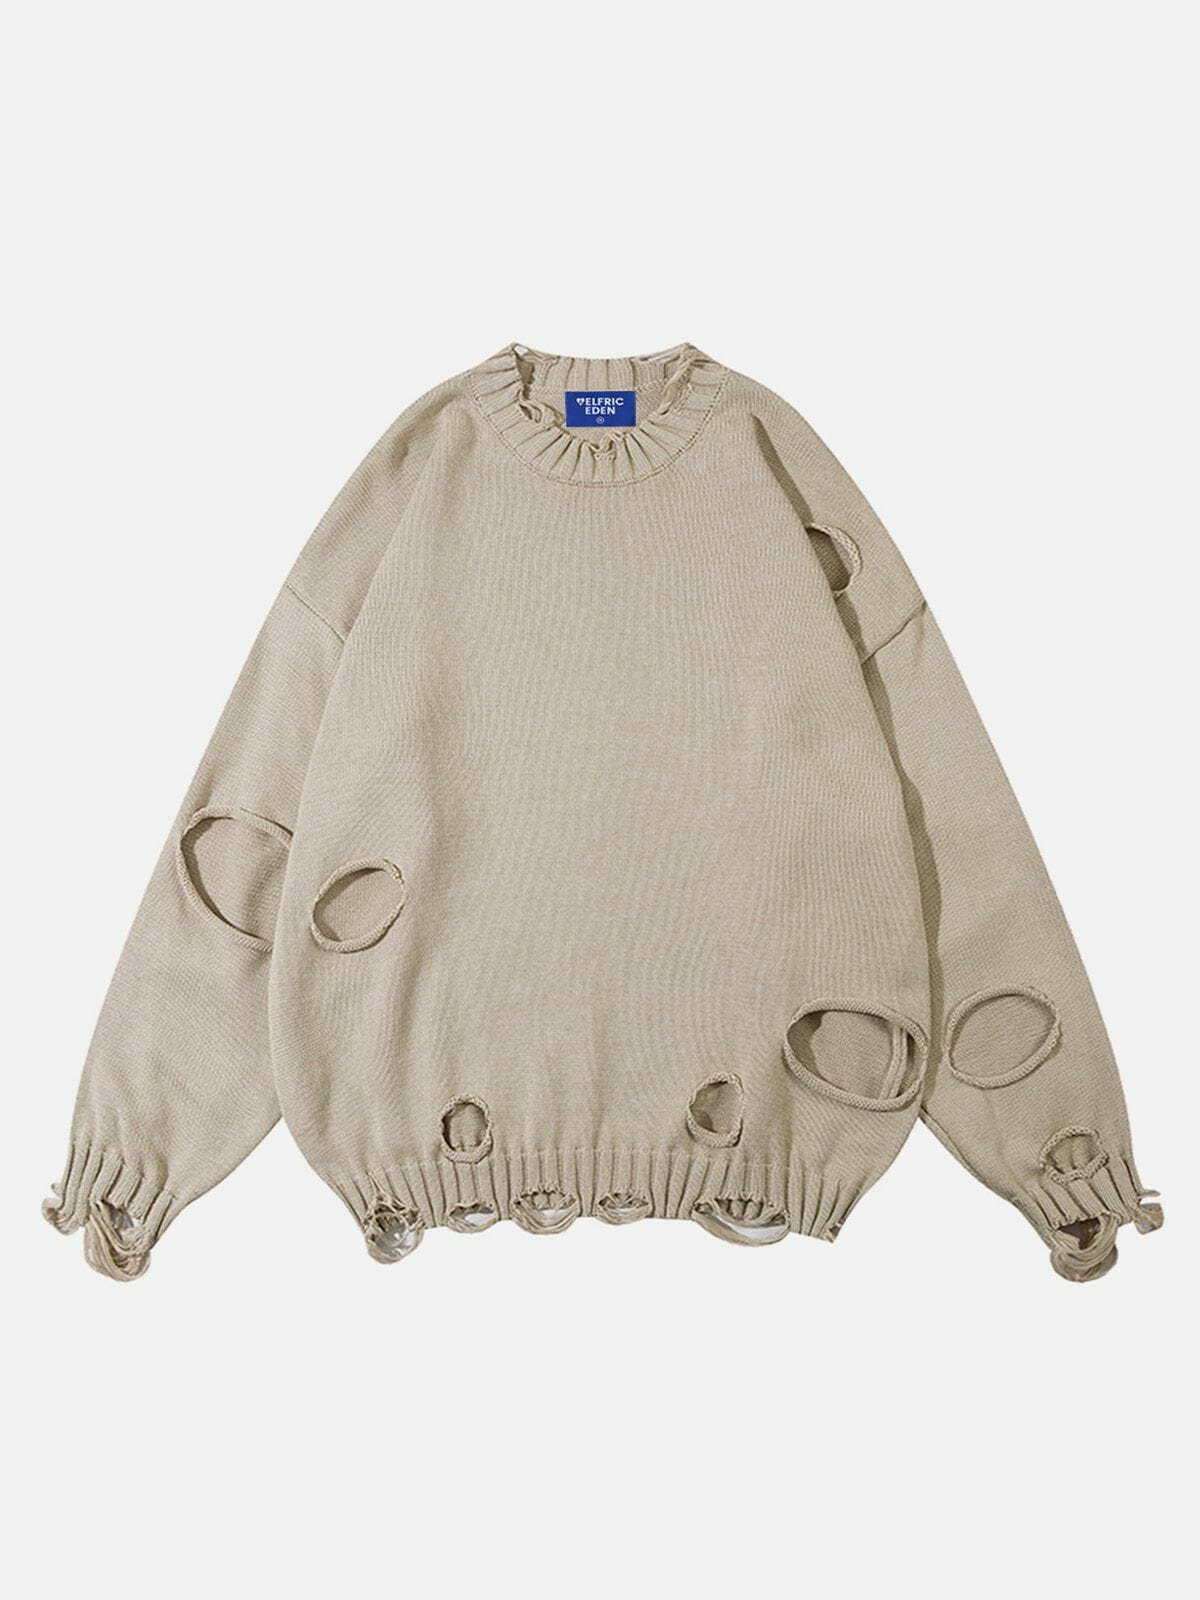 edgy distressed sweater urban fashion statement 3909